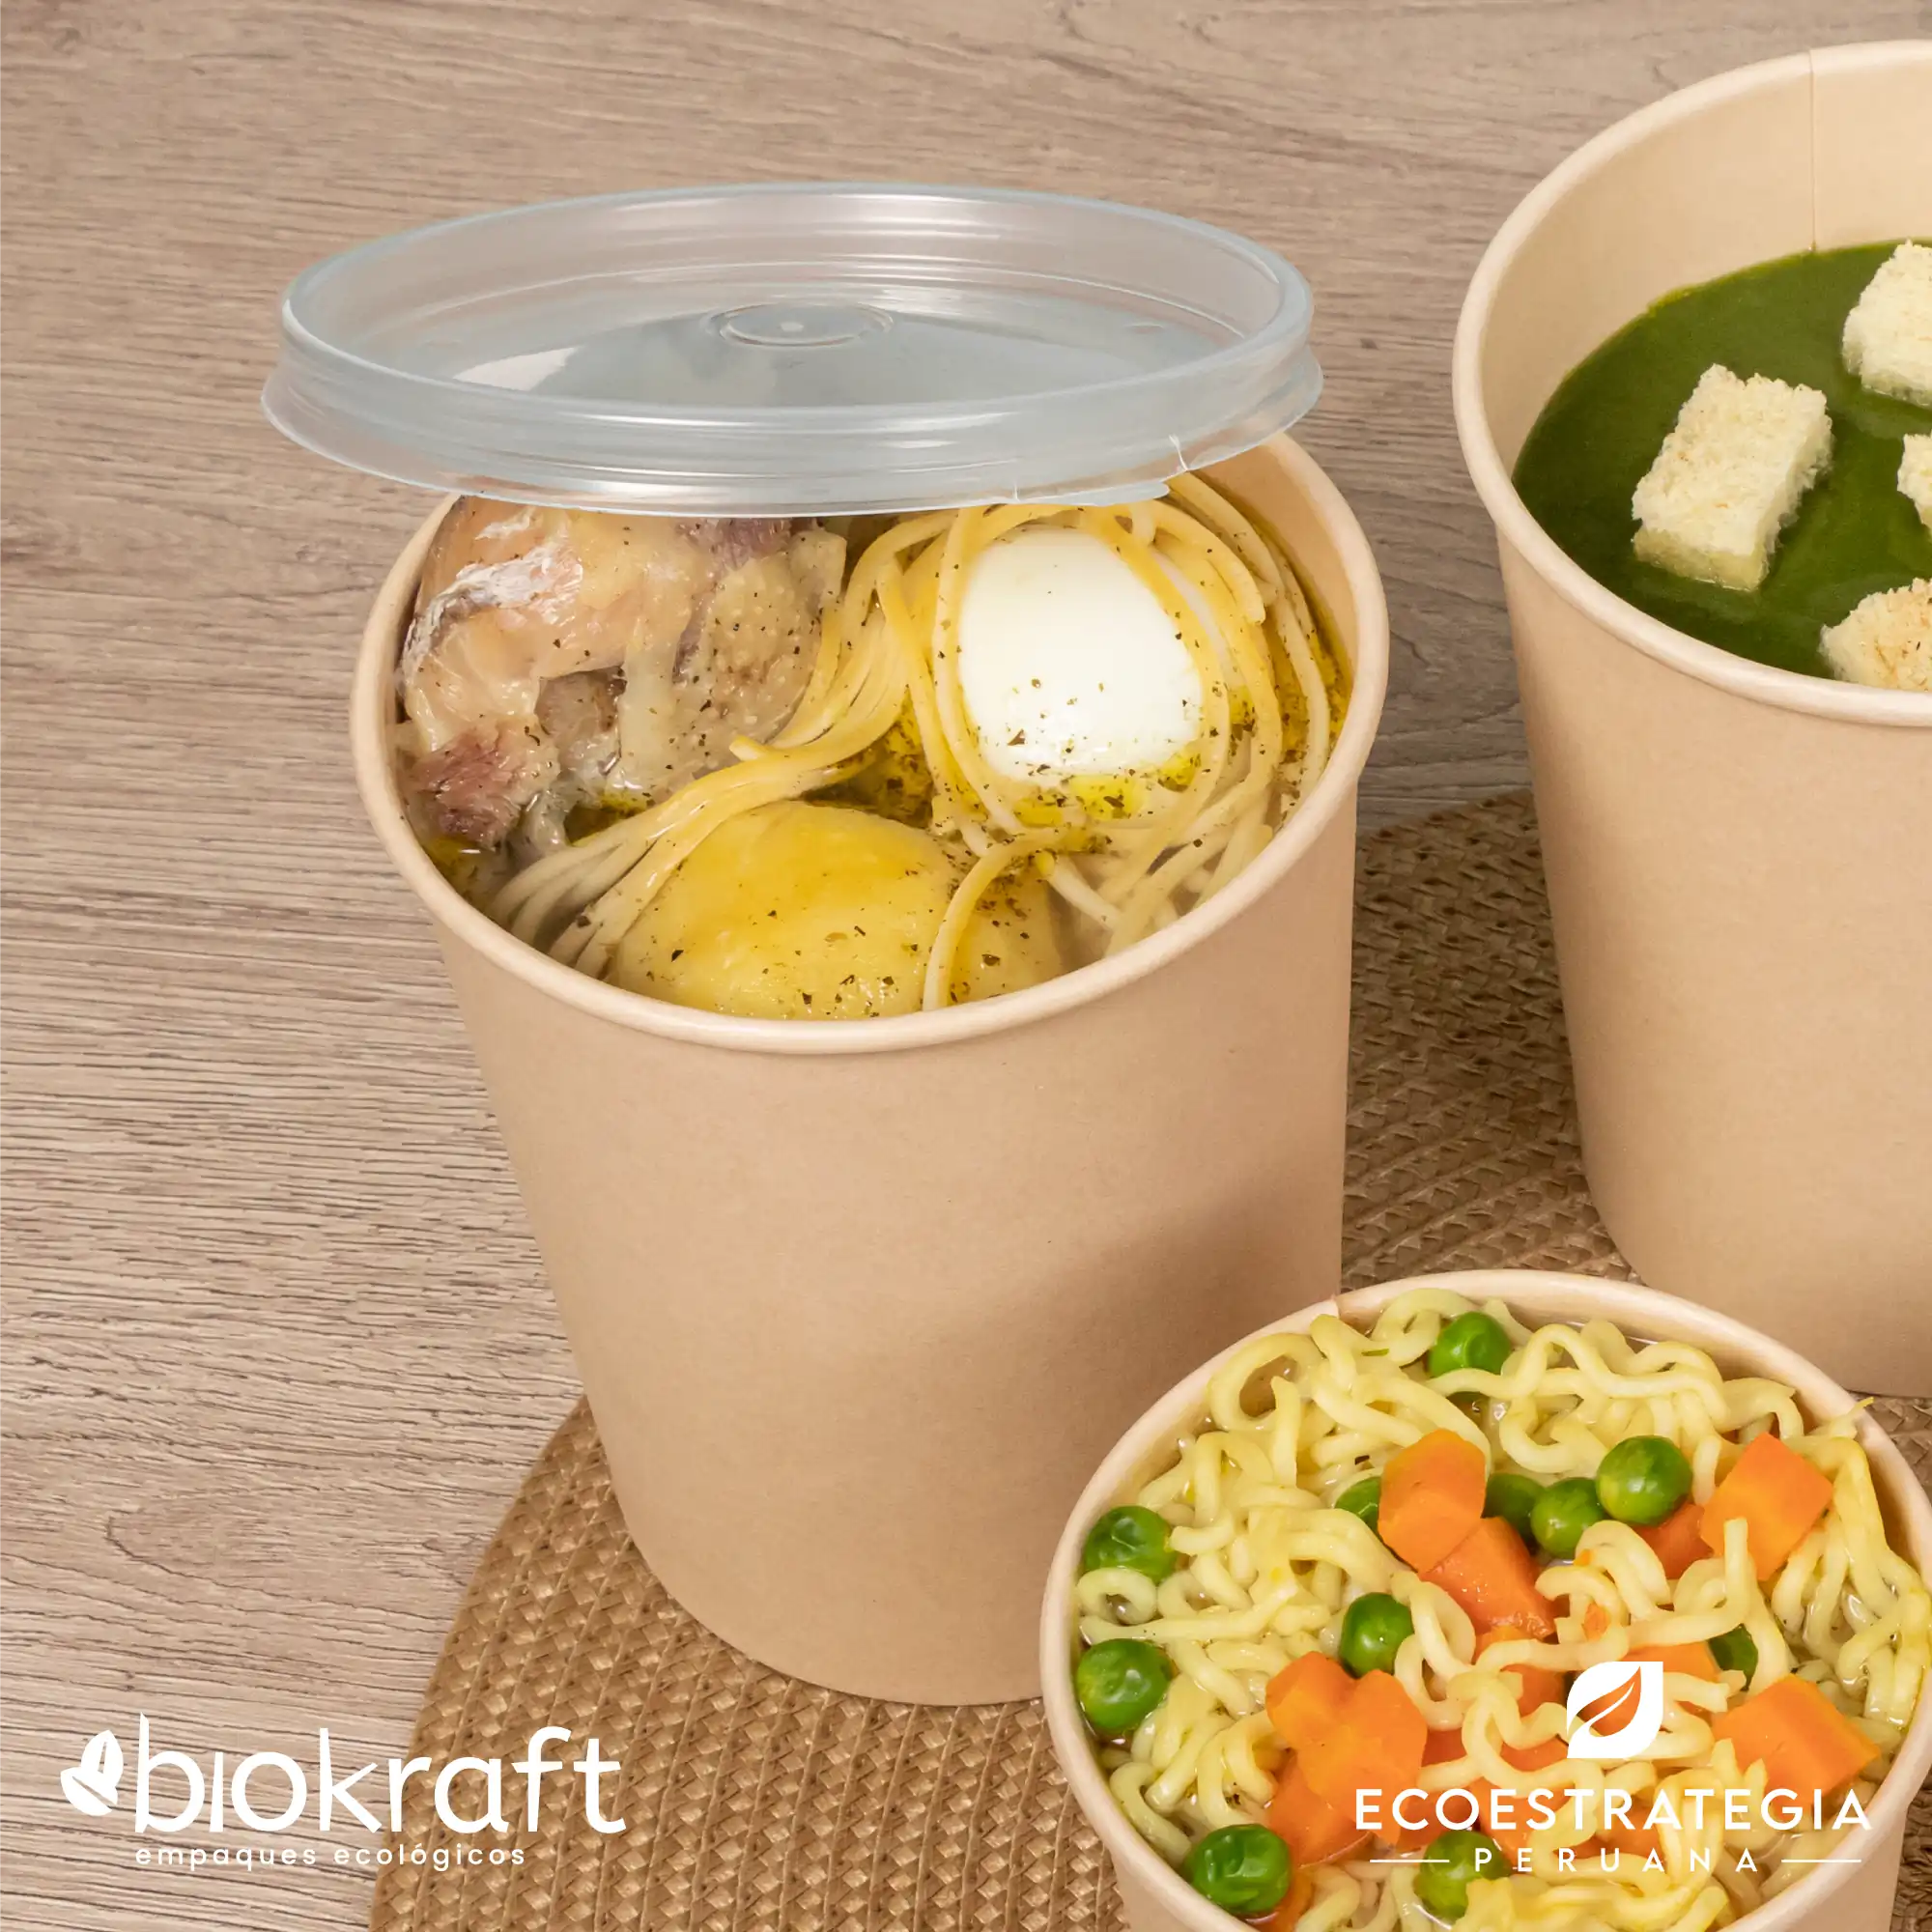 Este bowl sopero biodegradable de 32 oz es a base de fibra de bambu. Envases descartables con gramaje ideal, cotiza tus empaques, platos y tapers para helados